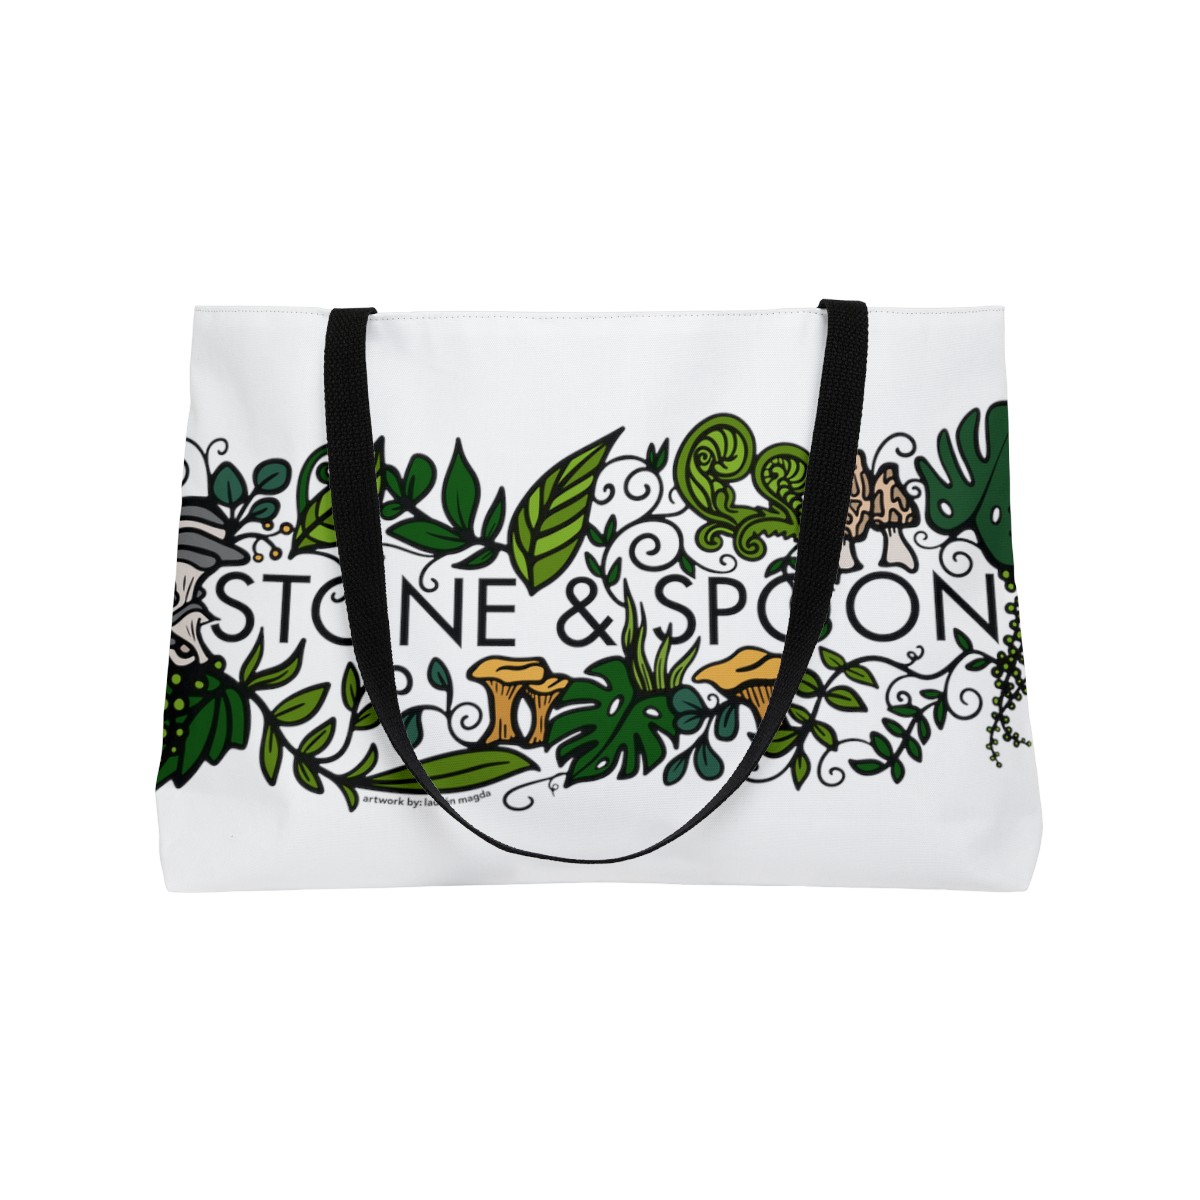 Stone & Spoon Weekender Tote Bag product thumbnail image